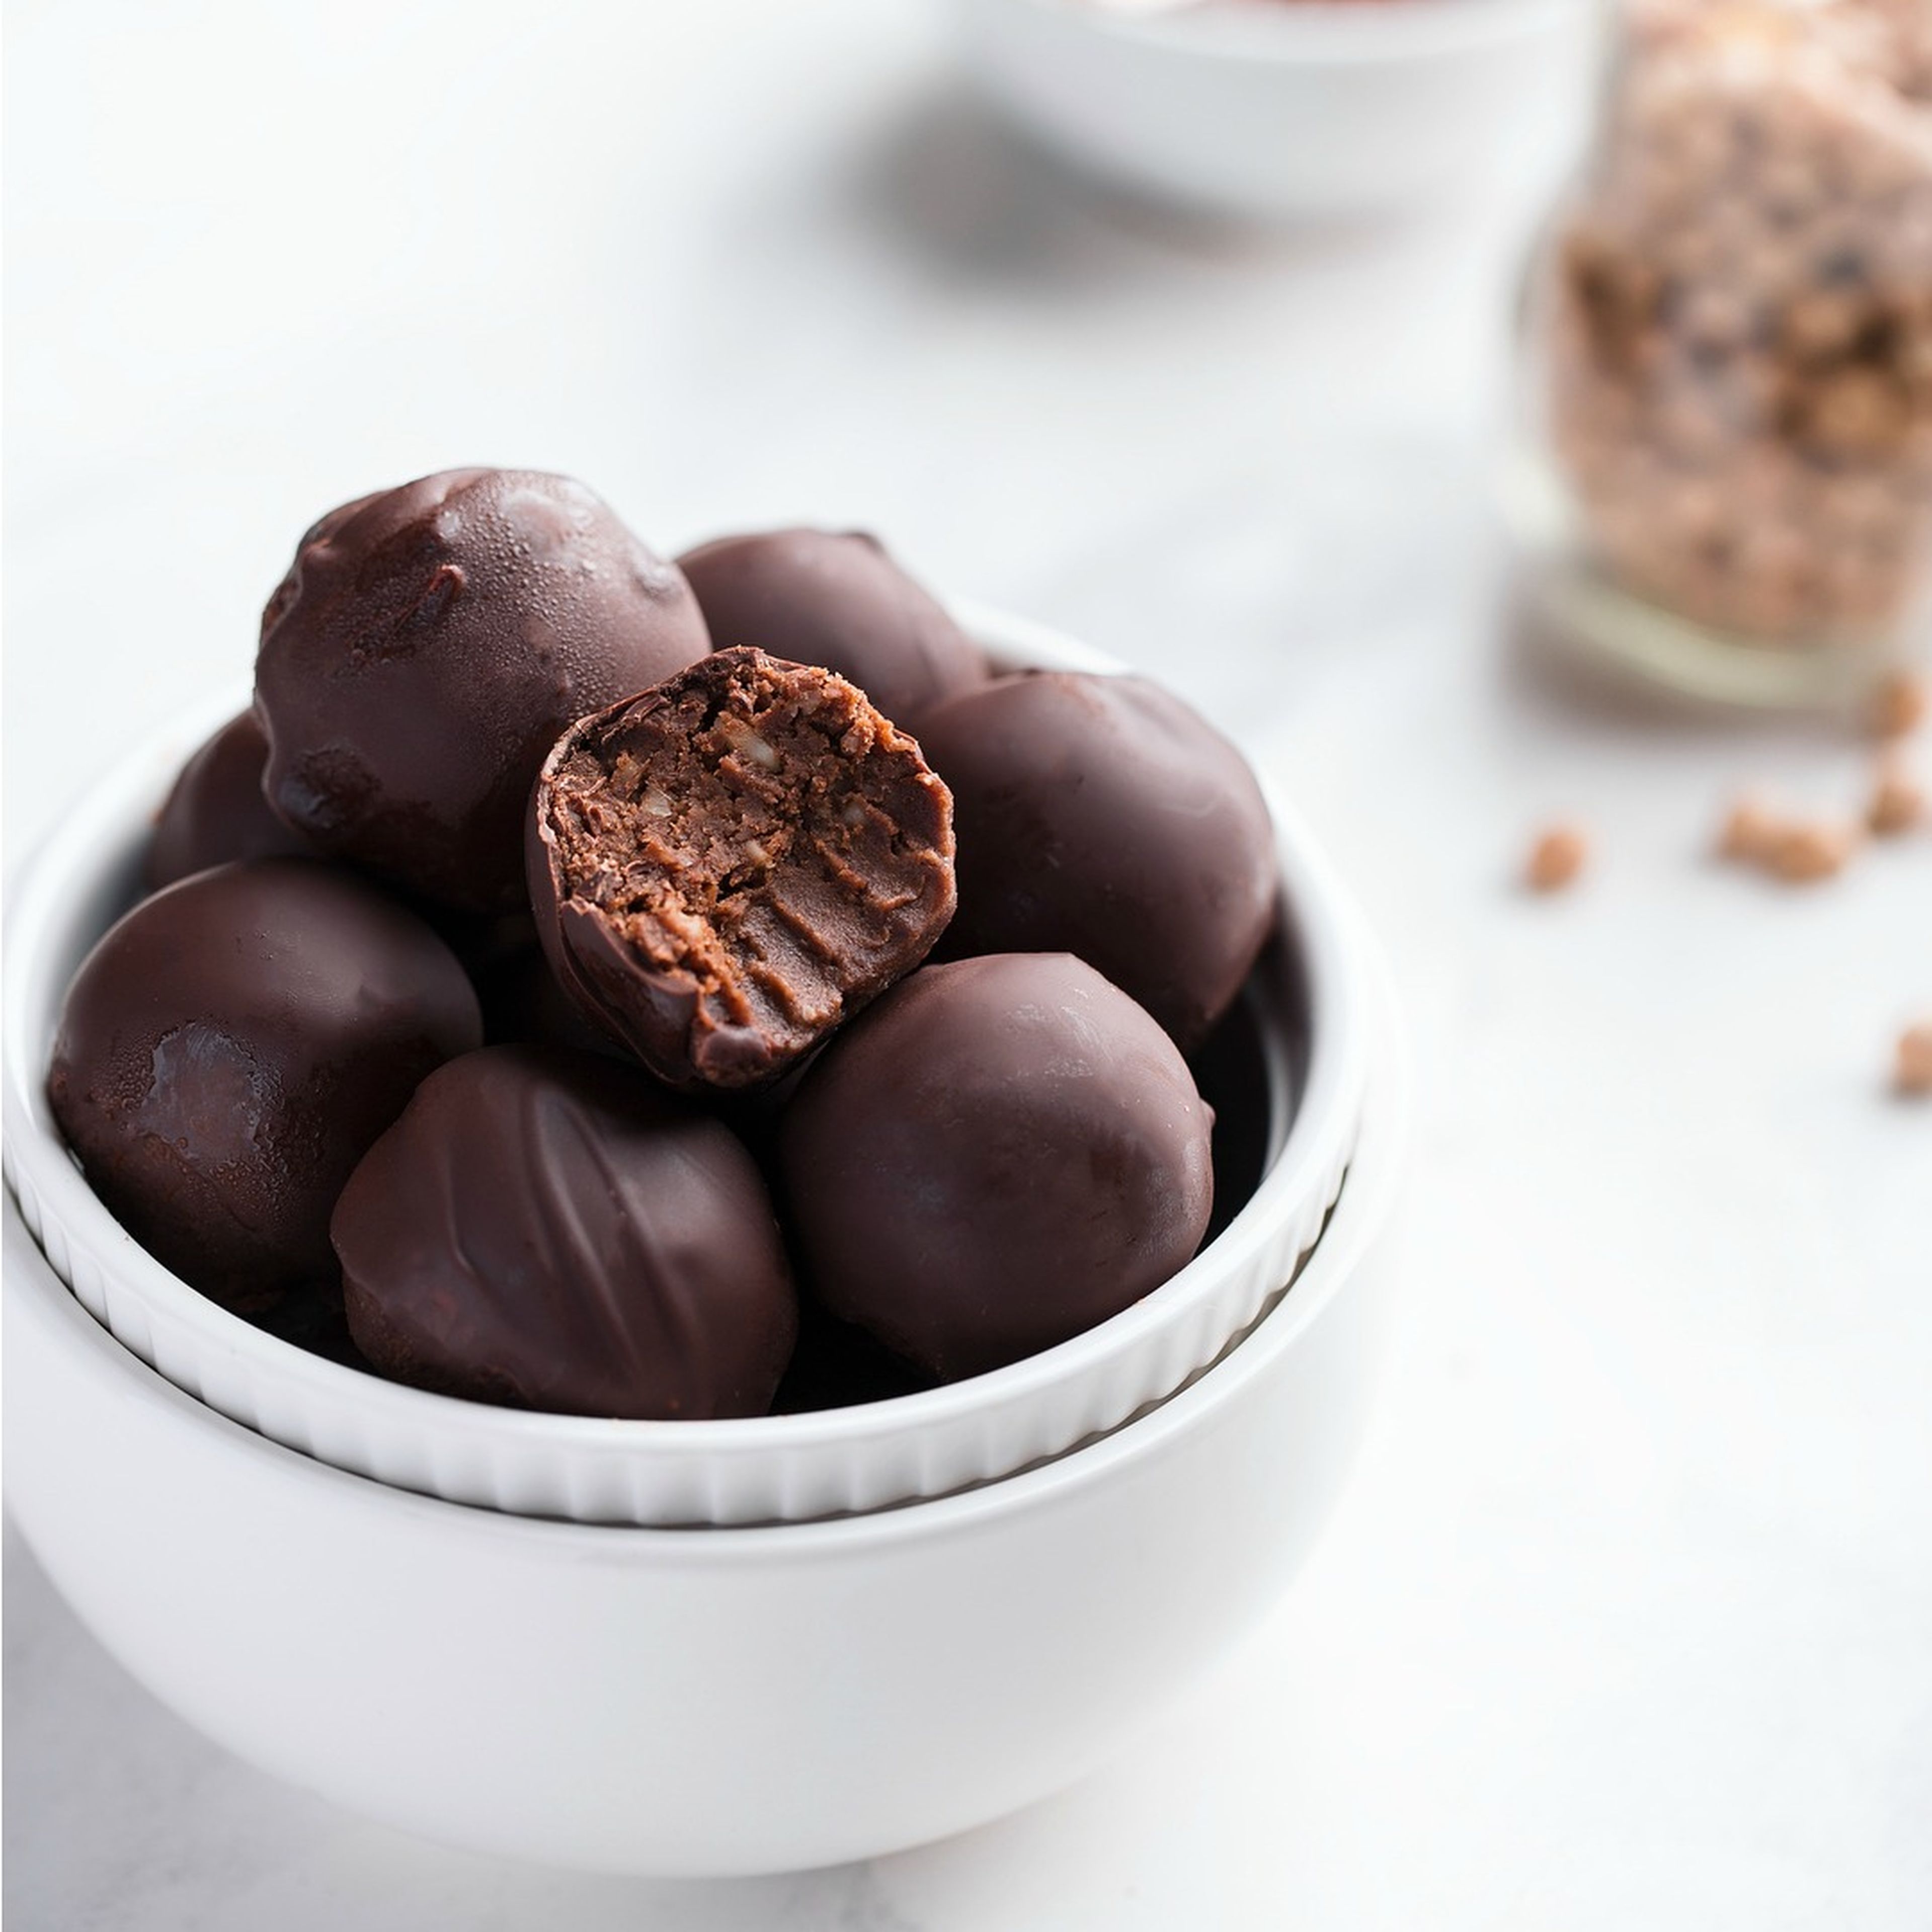 Chickpea chocolate truffles